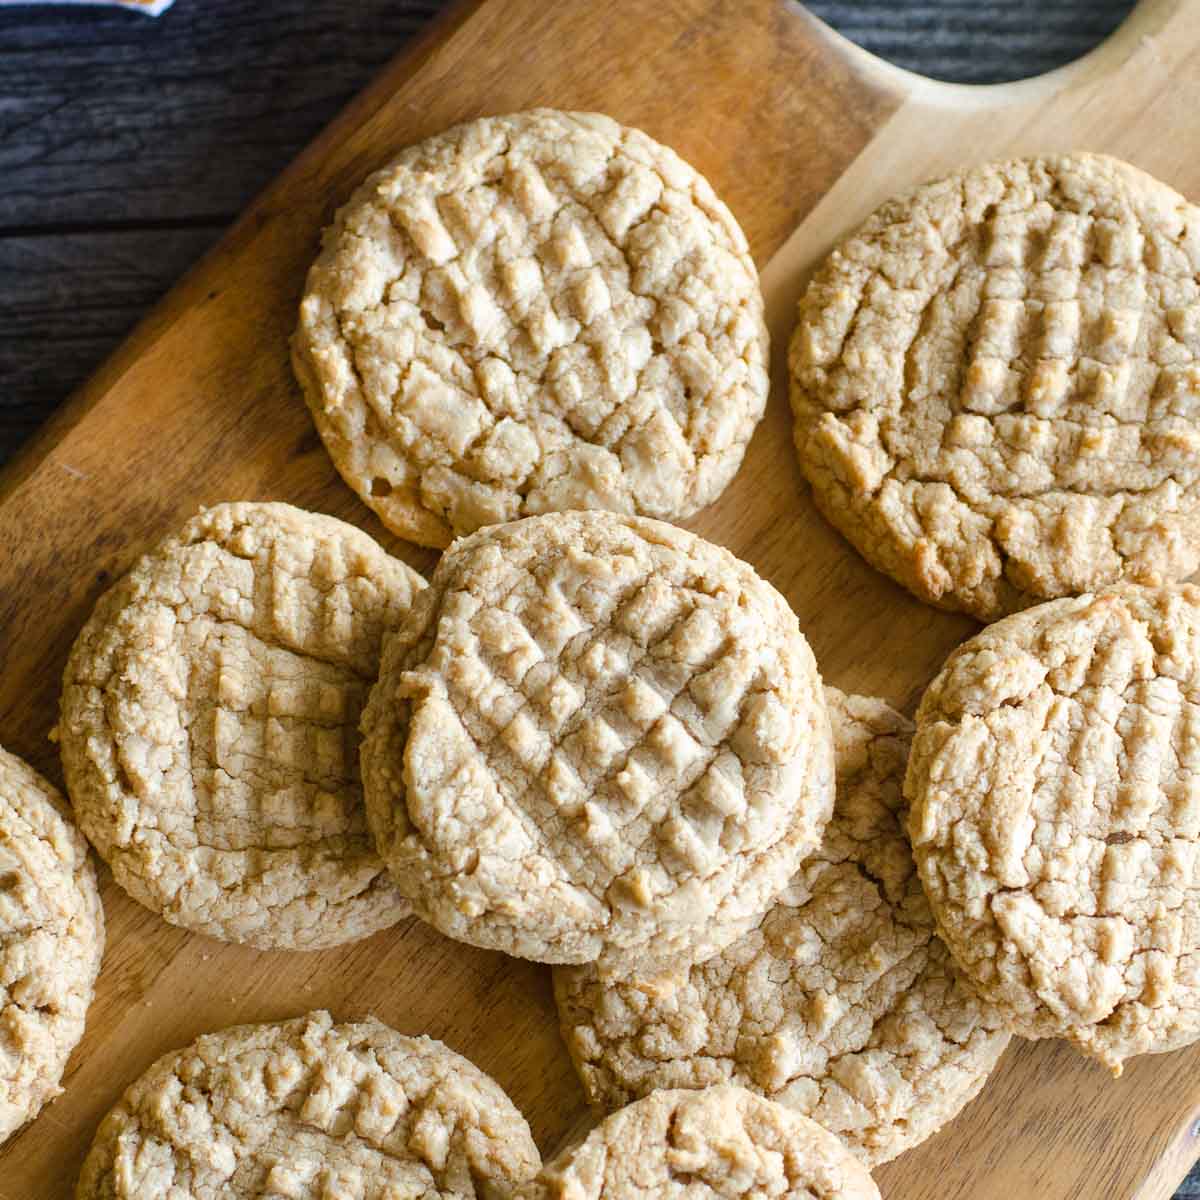 Keto Peanut Butter Cookies - Flourless cookies. Only 3 ingredients!